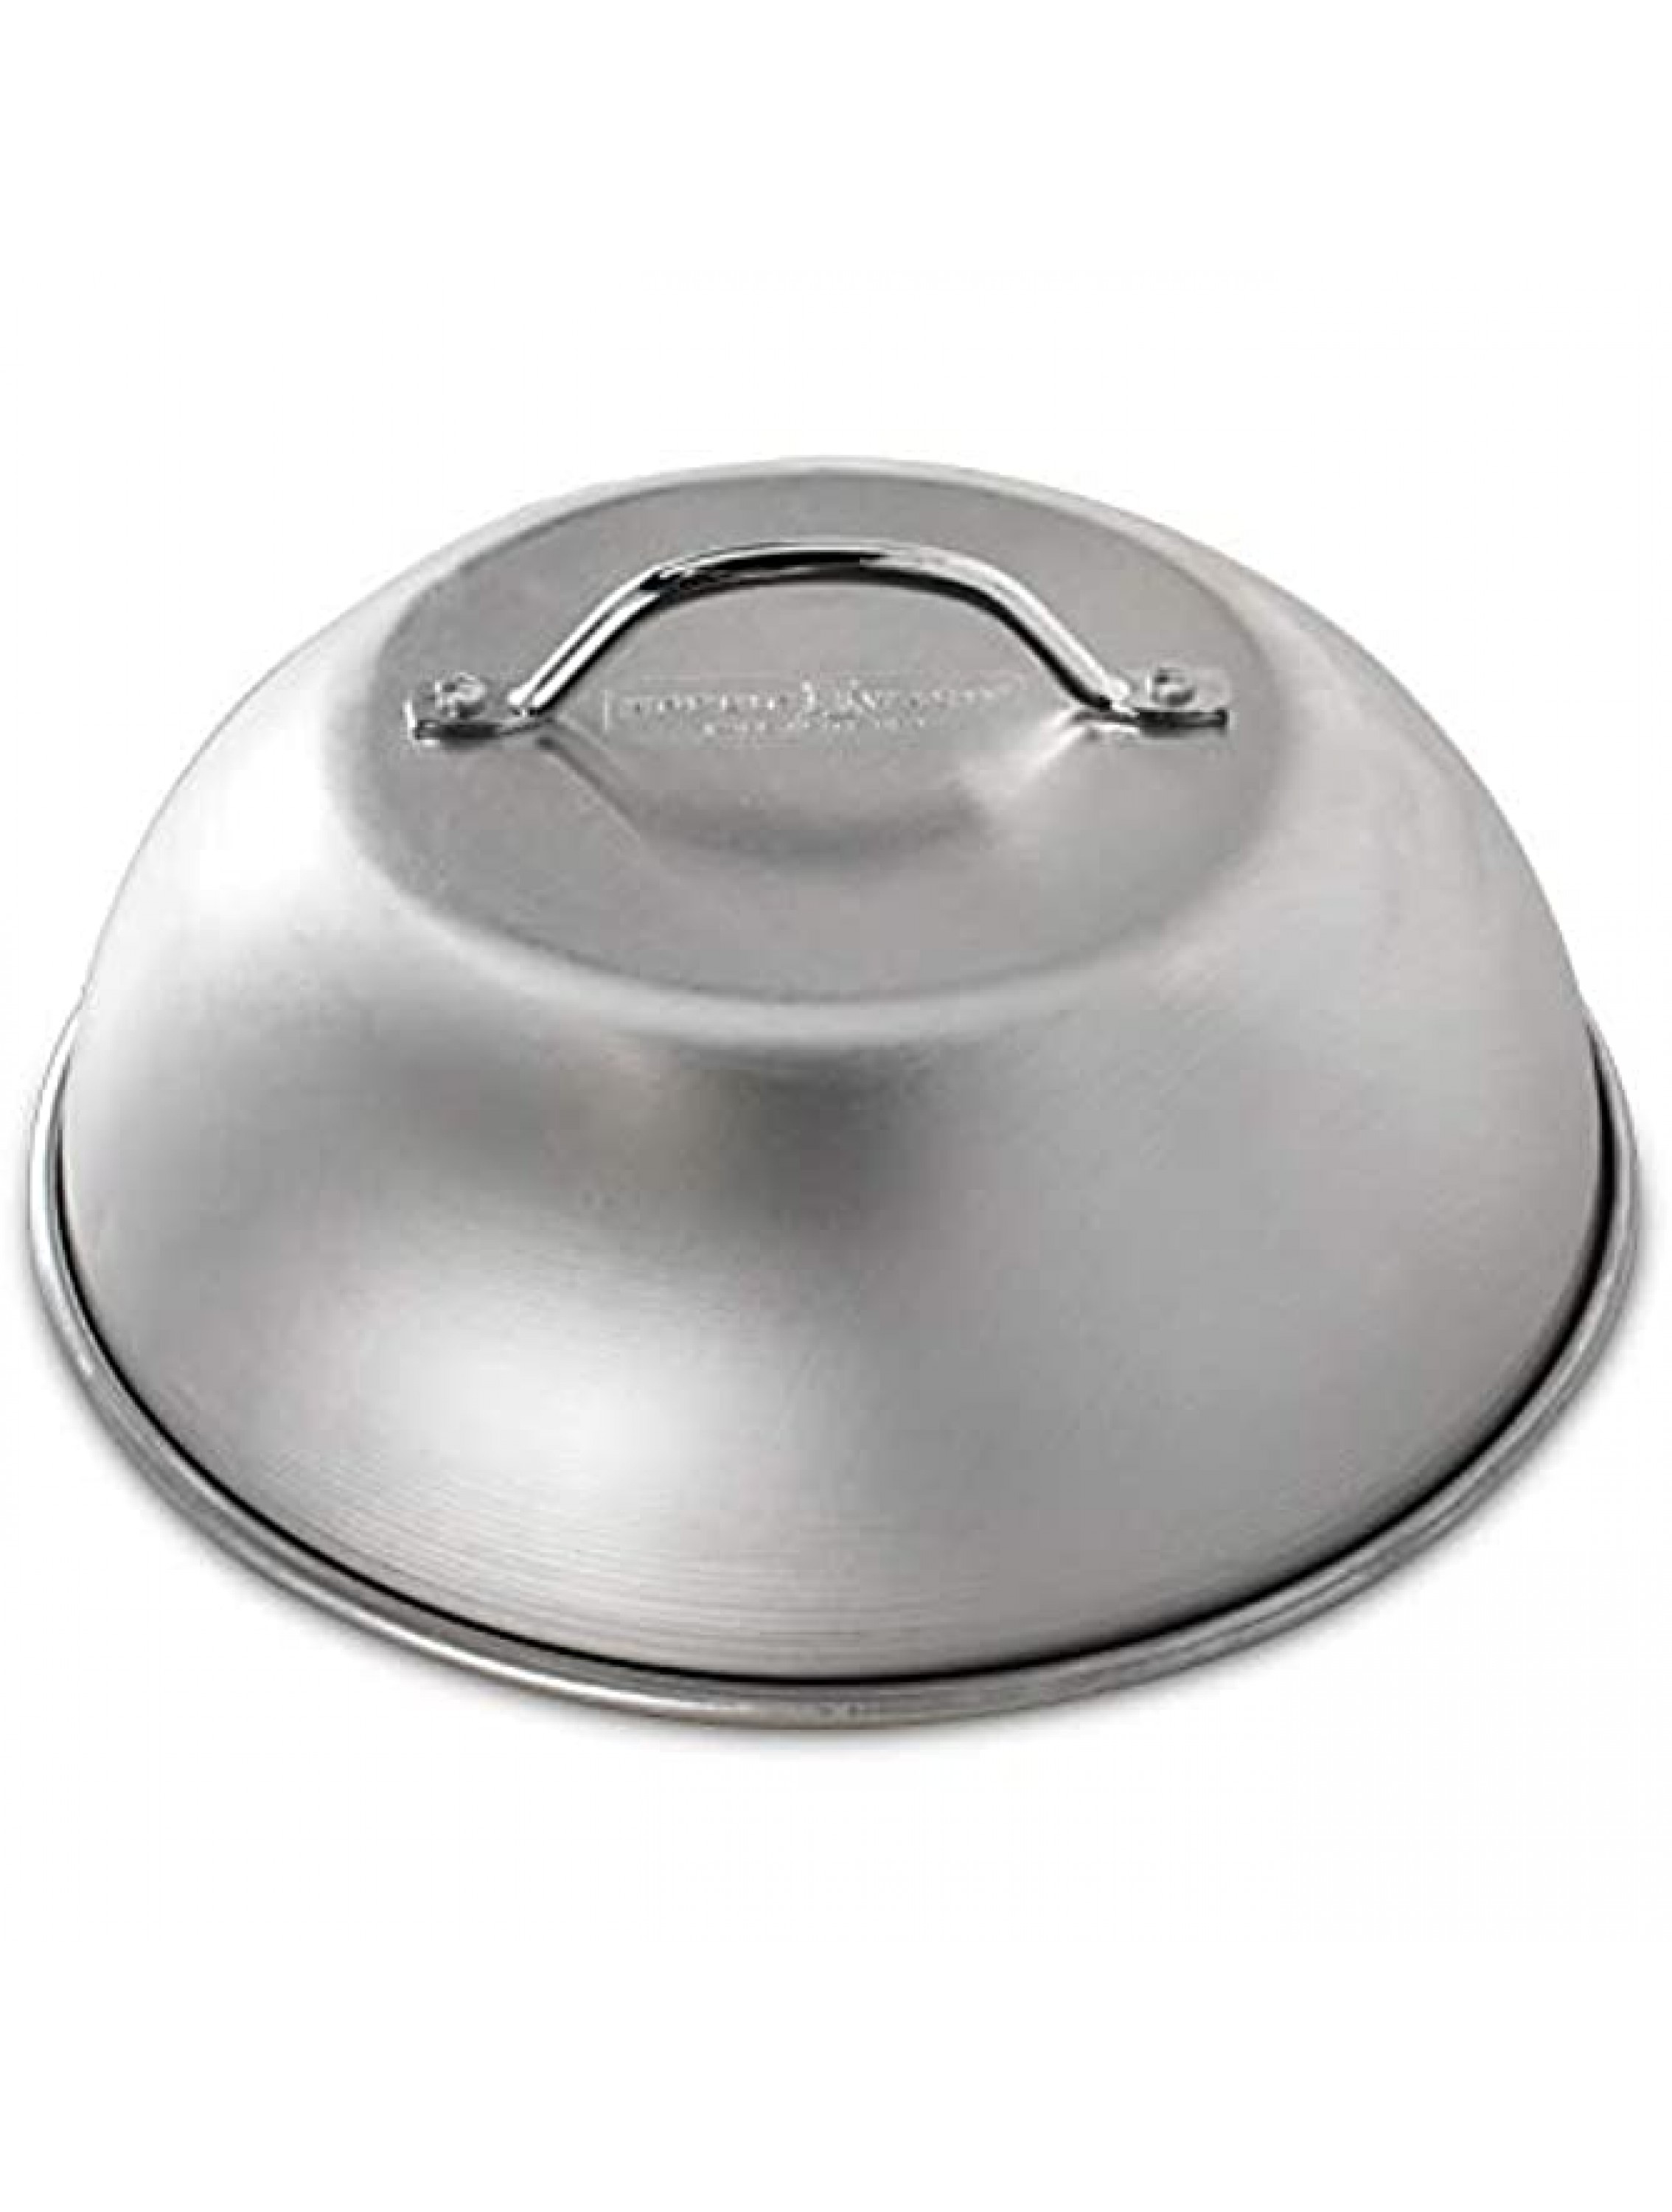 Nordic Ware Dome Grill Lid 11.5 Inch Silver - BA8W8XD76